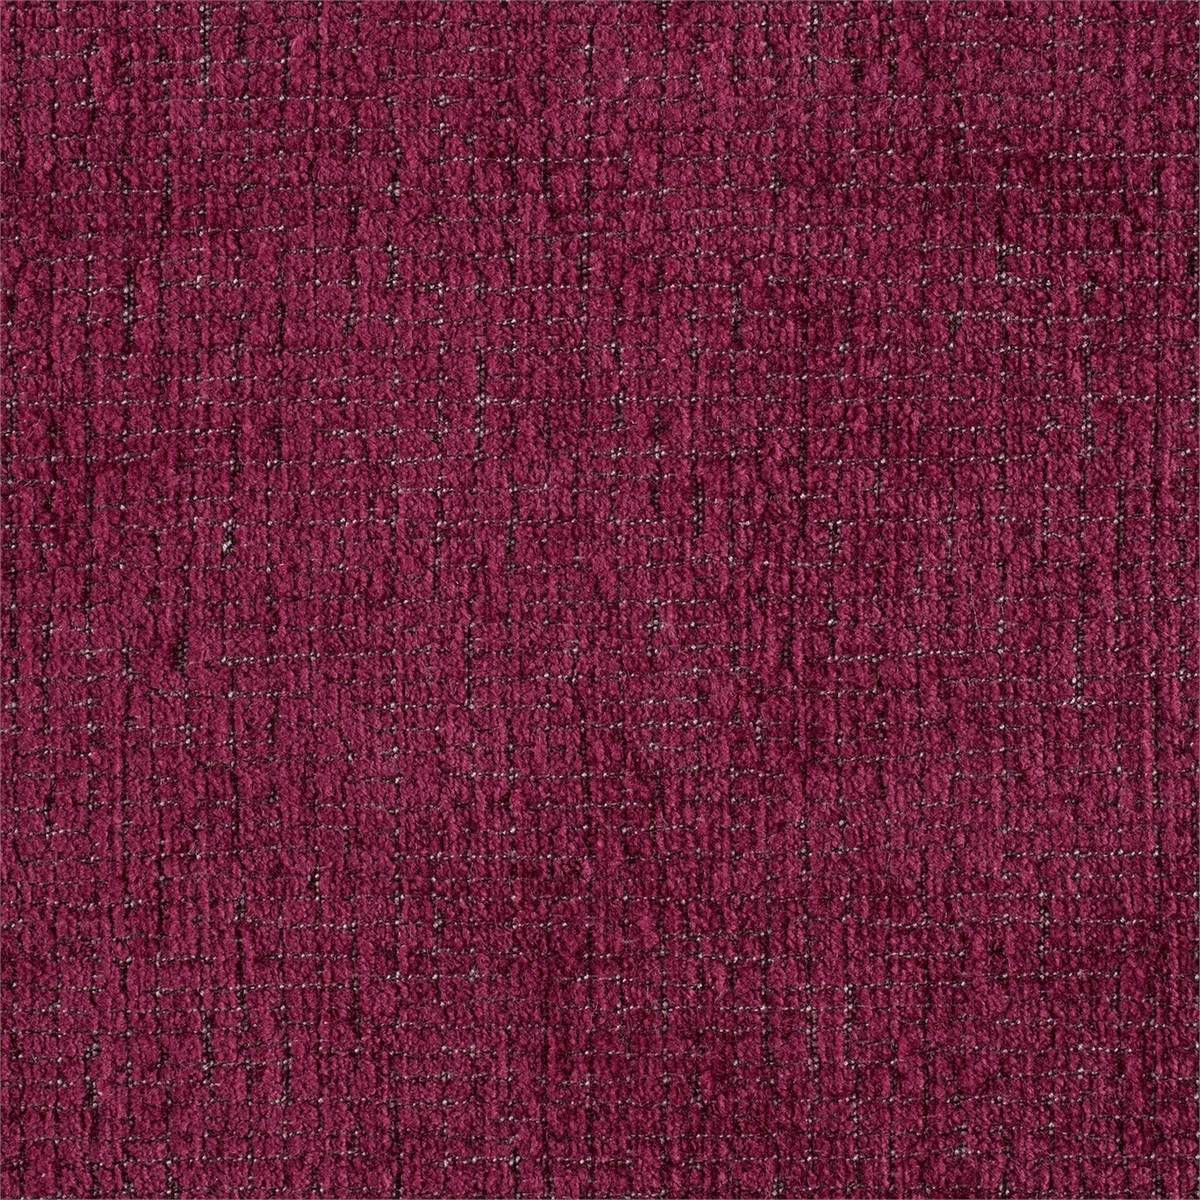 Tessella Deep Rose Fabric by Sanderson